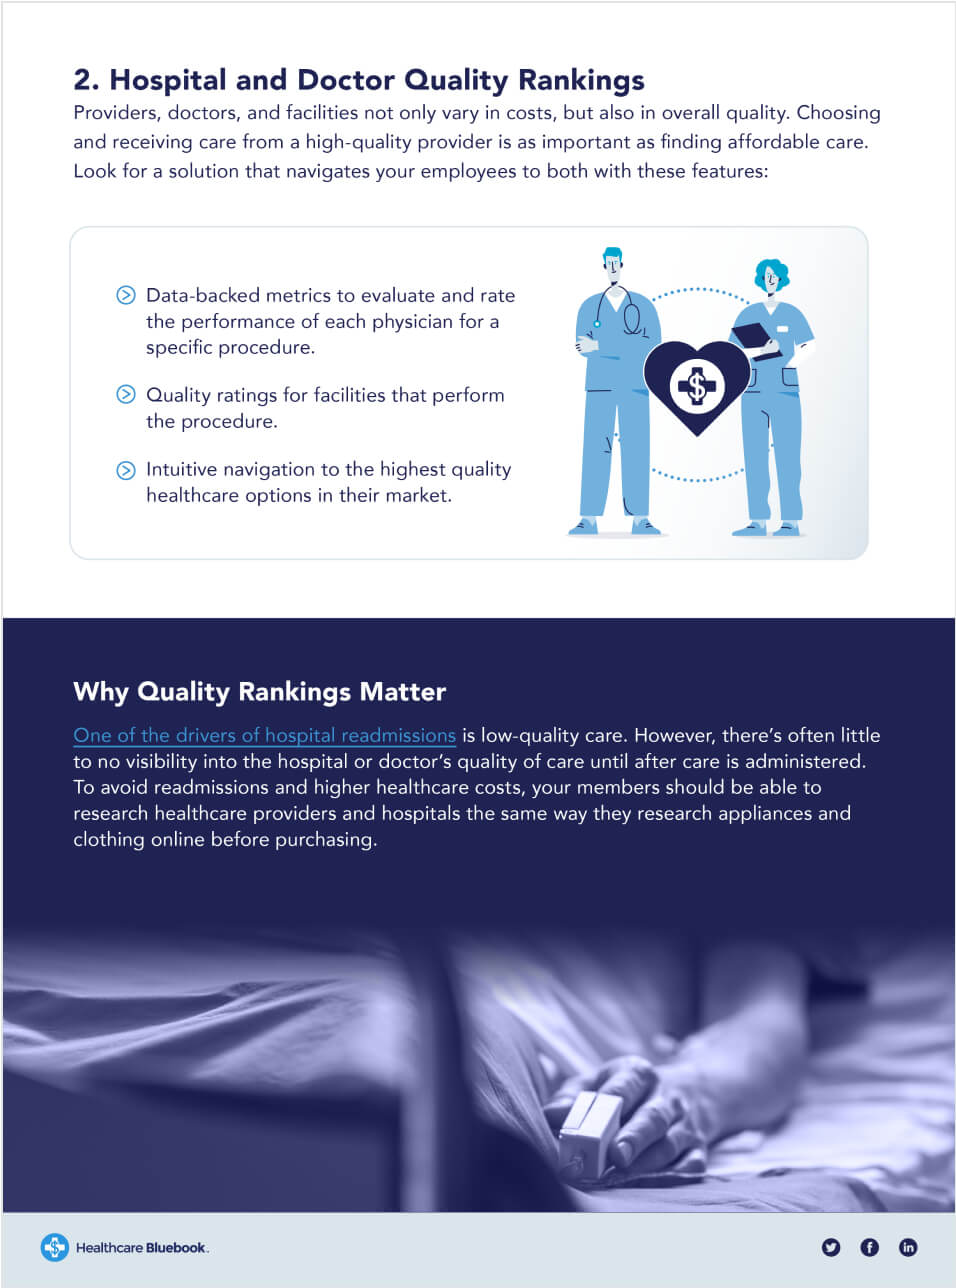 SmartBug Work Portfolio - Healthcare Bluebook digital designs